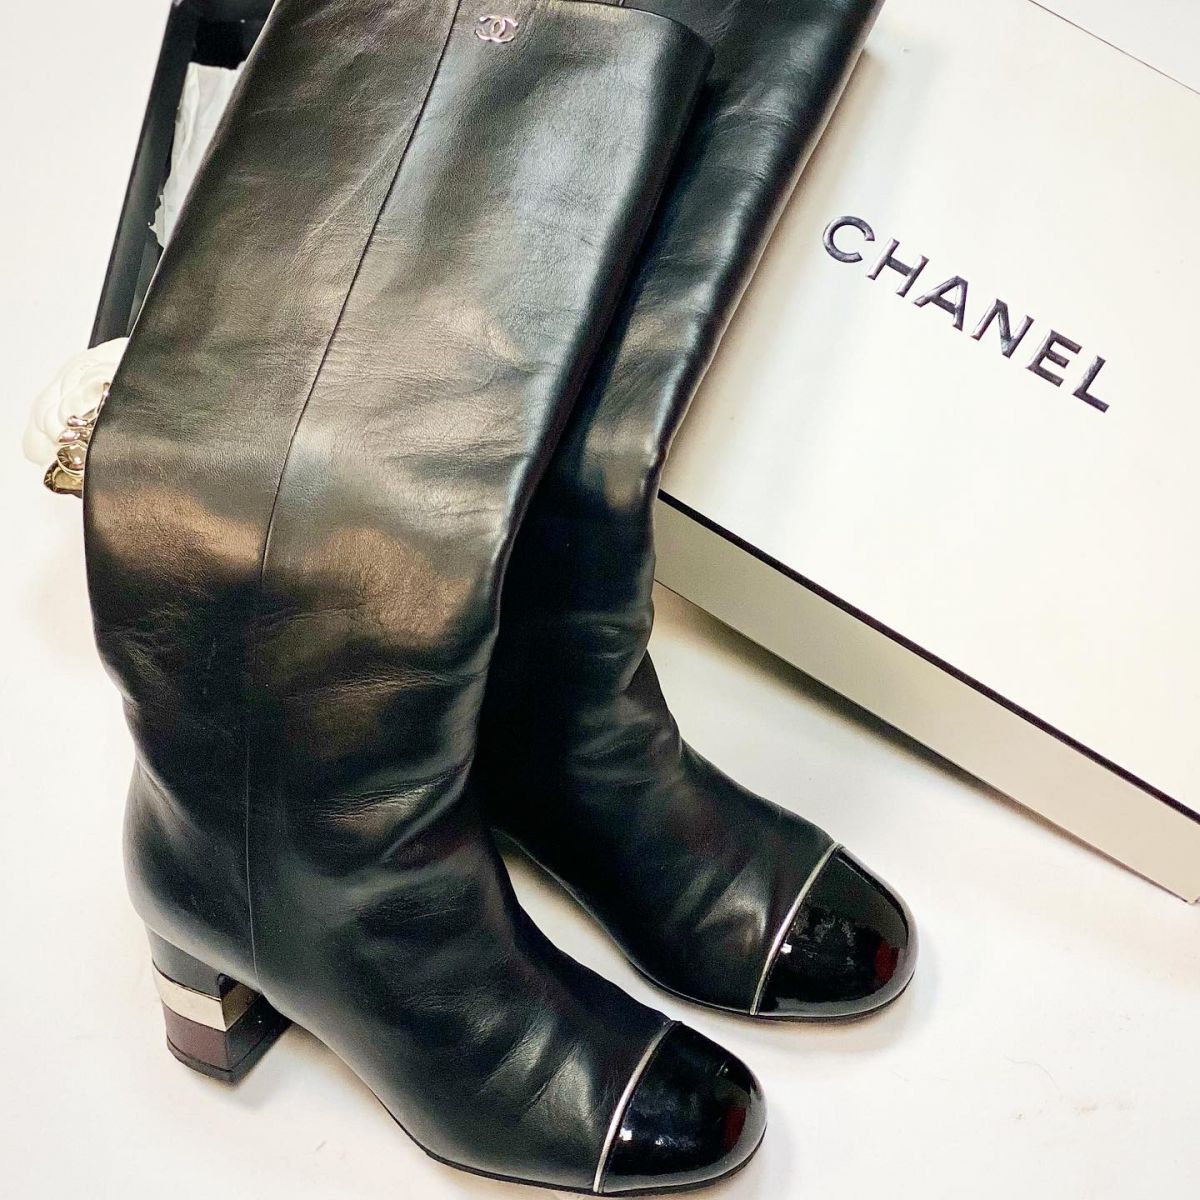 Сапоги Chanel размер 37 цена 30 770 руб 